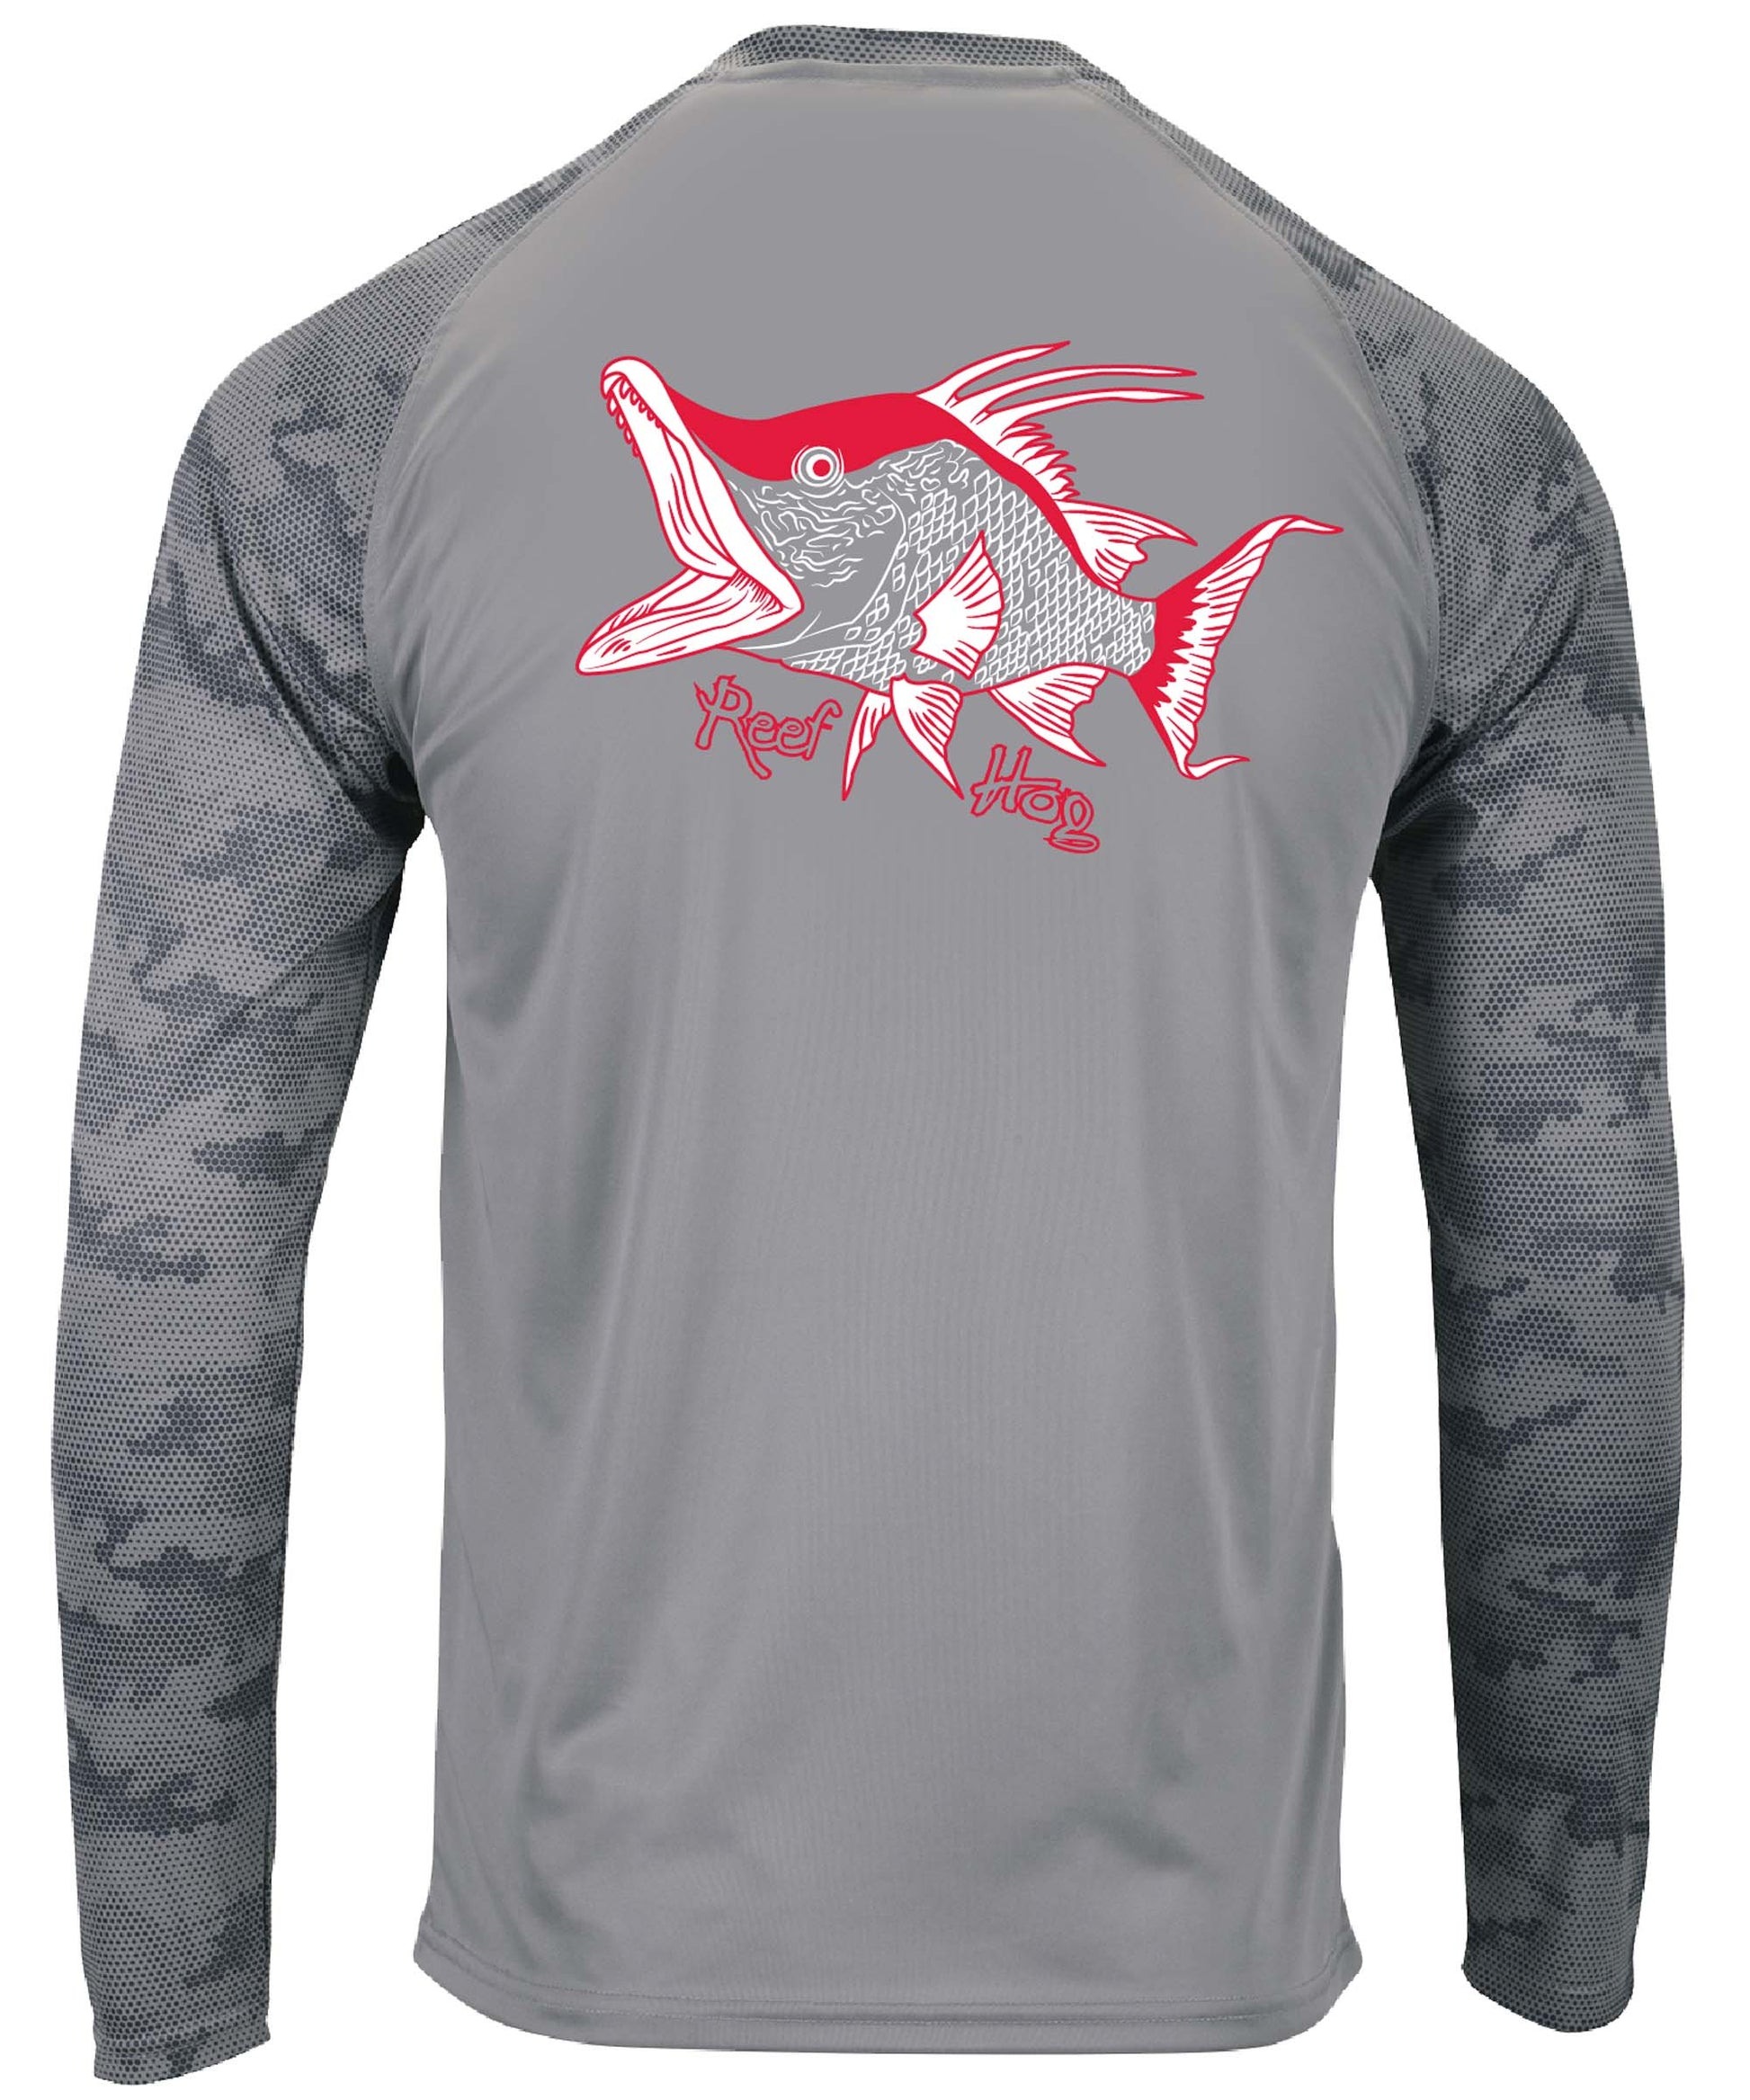 Hogfish Reef Hog Performance Dry-Fit Fishing 50+Upf Sun Shirts M / Med Gray Camo L/S - unisex